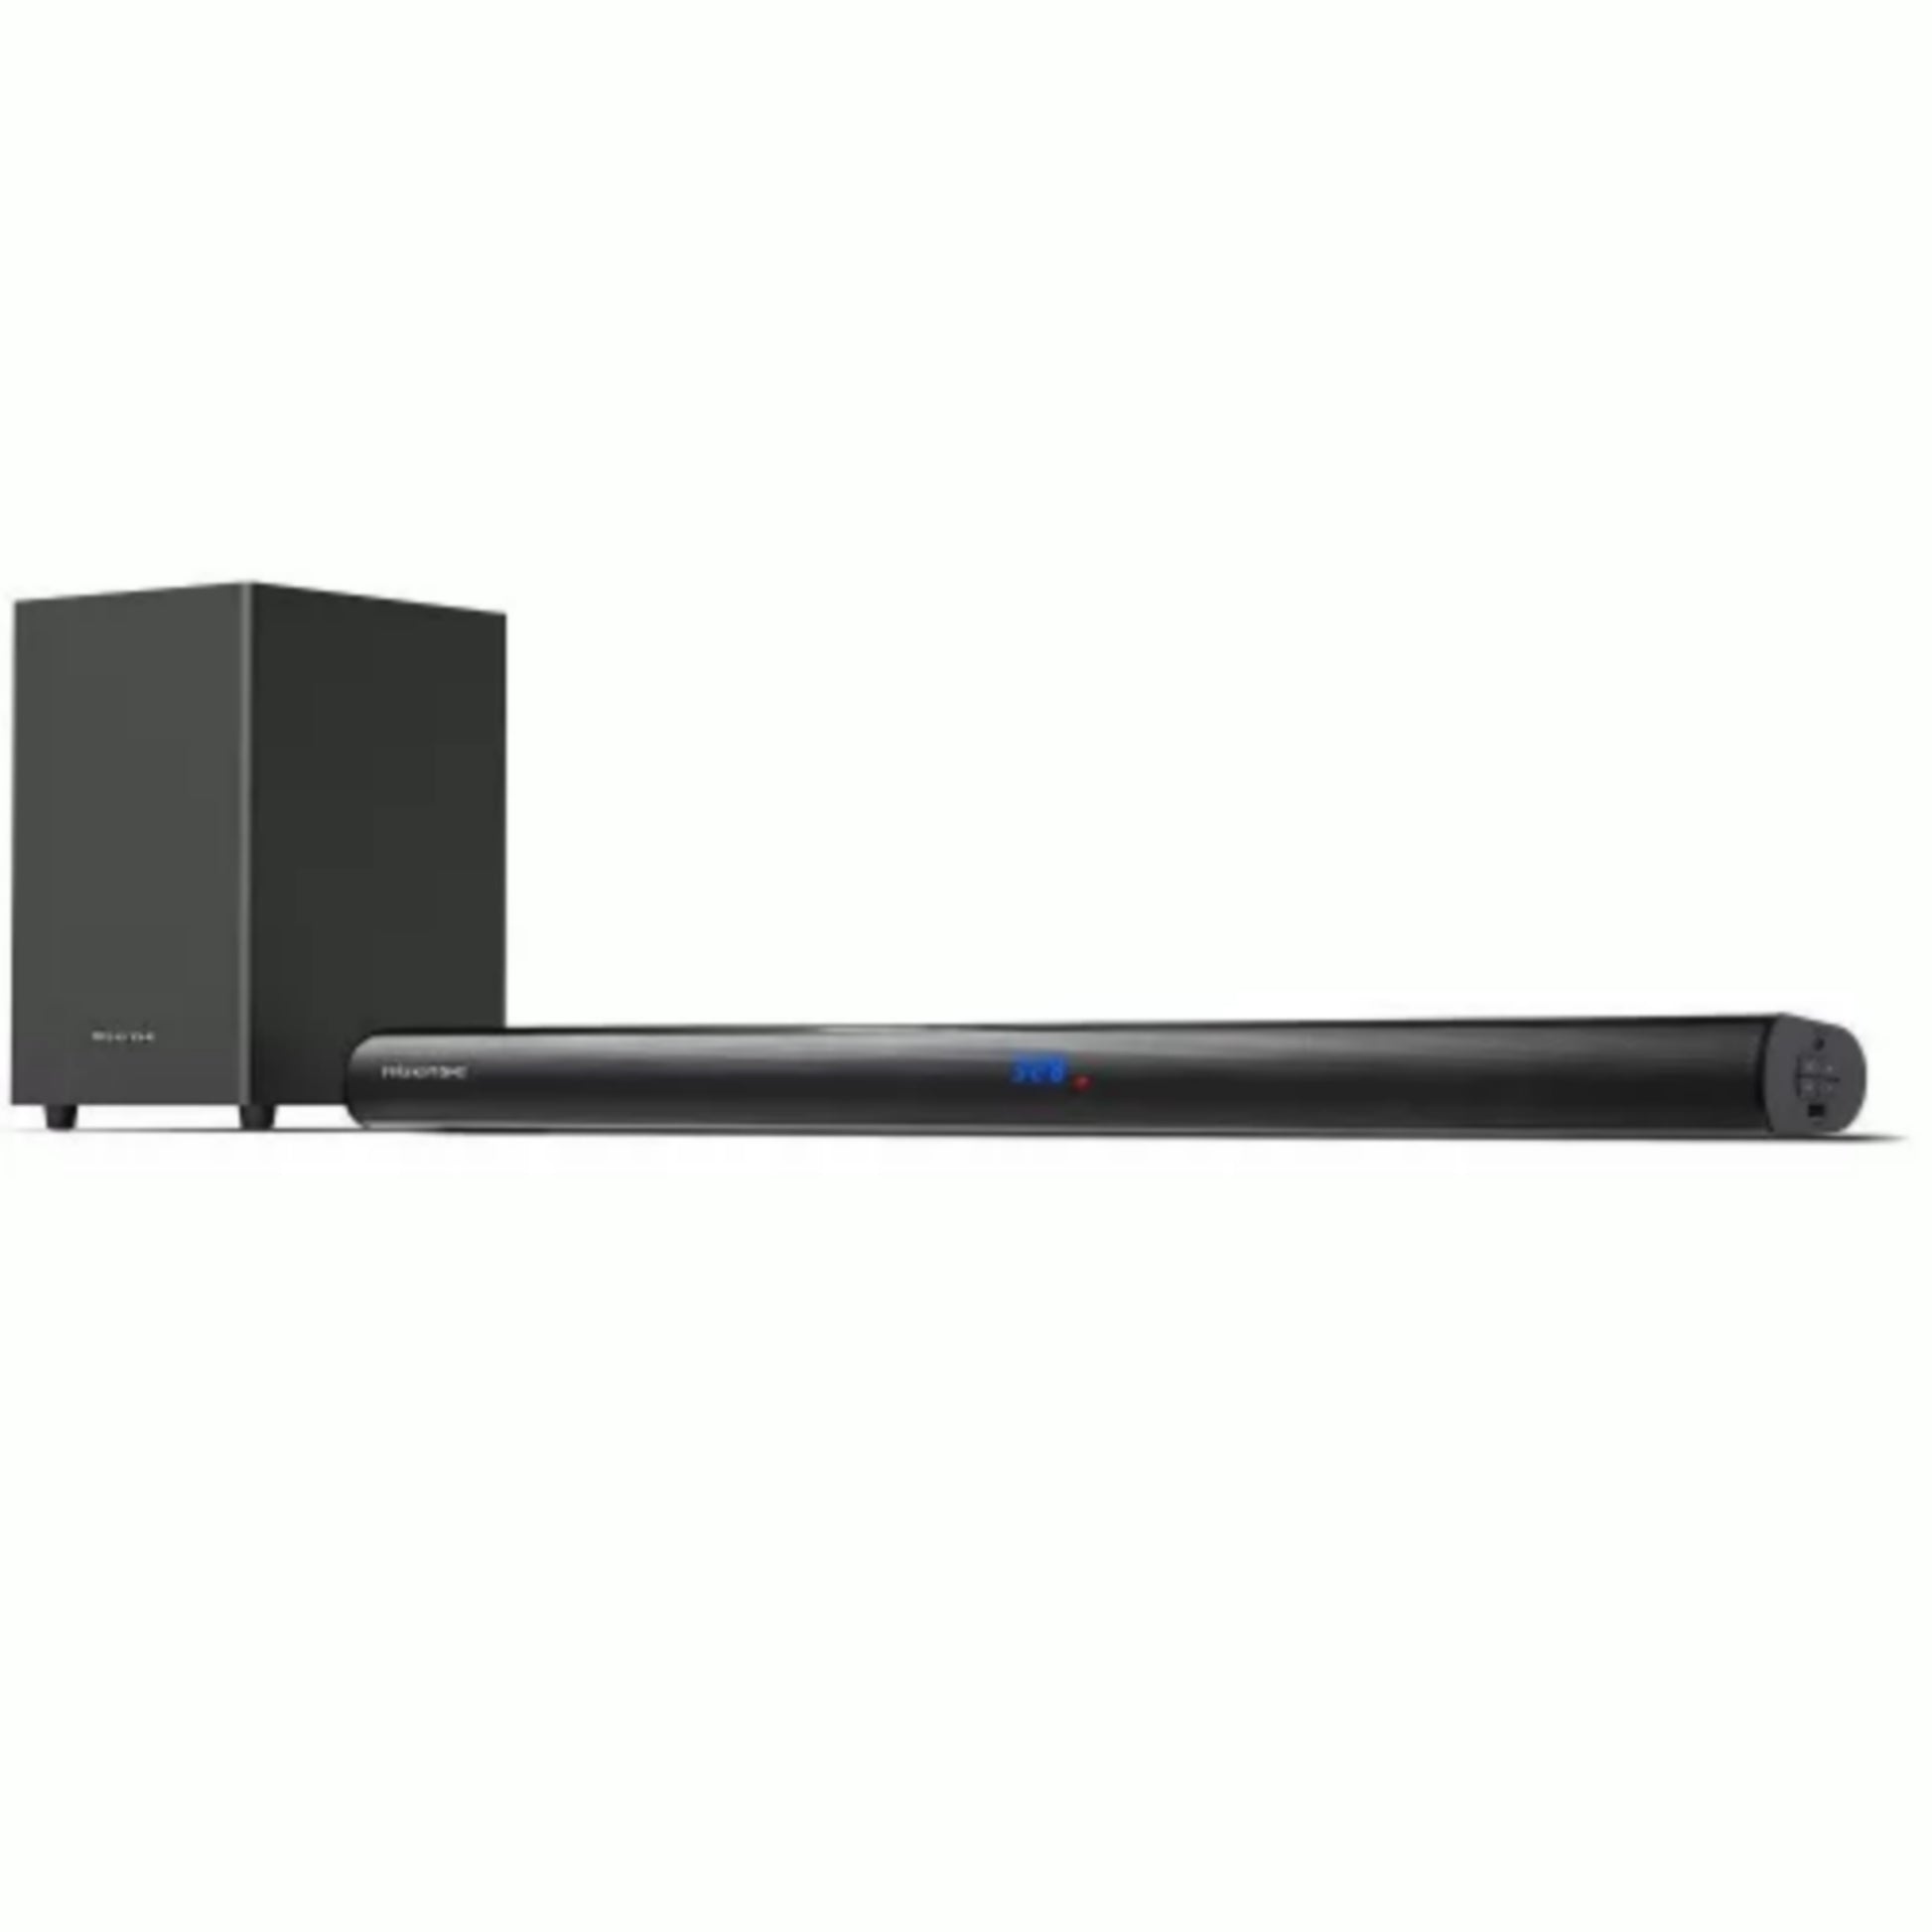 Hisense AUD212 2.1 Channel Sound Bar, Bluetooth and USB